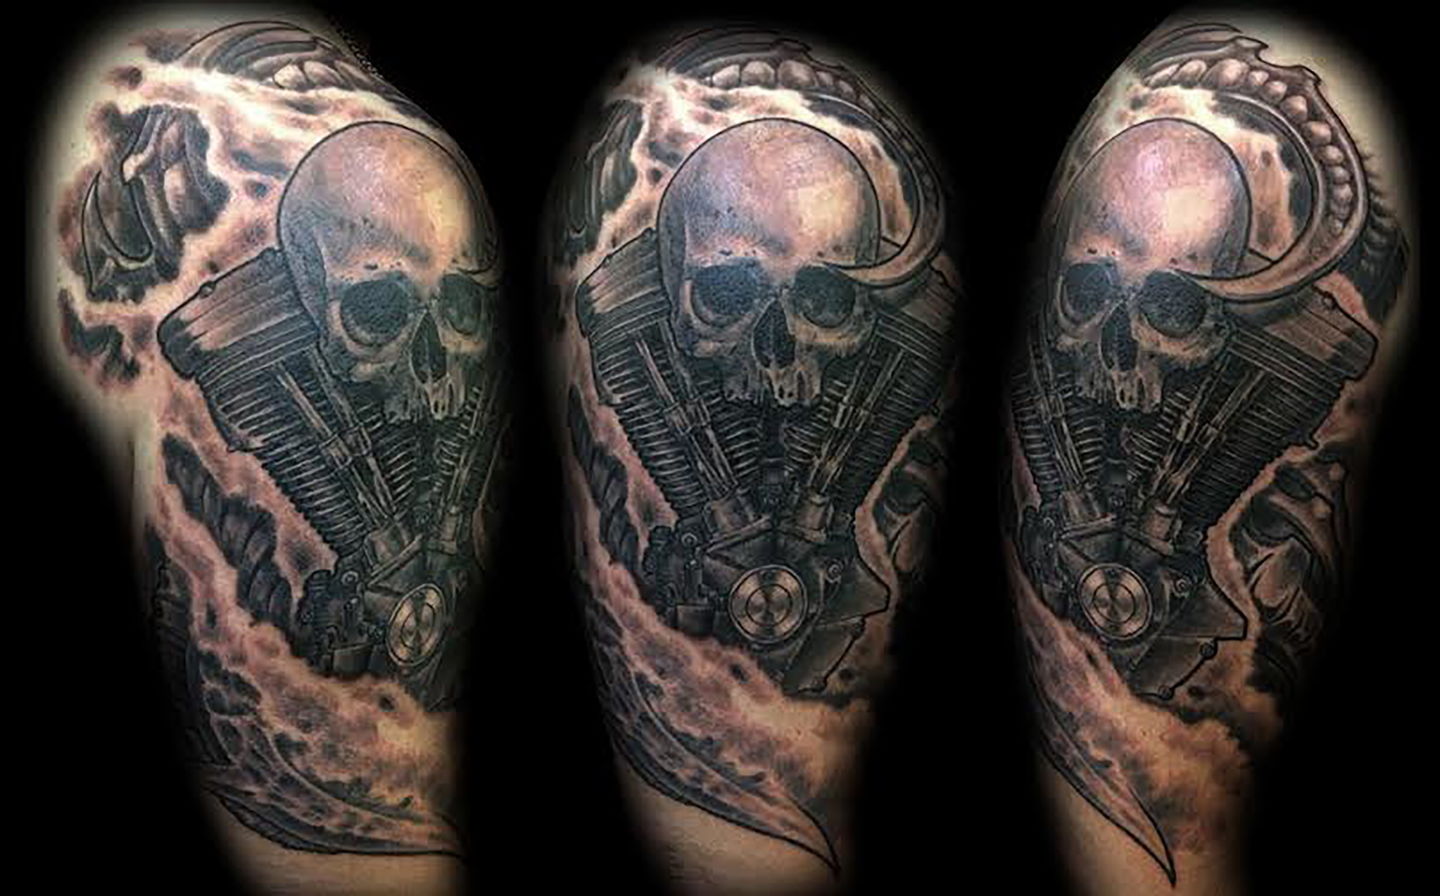 Las-vegas-tattoo-artist_joe-riley_biomech-harley-skull